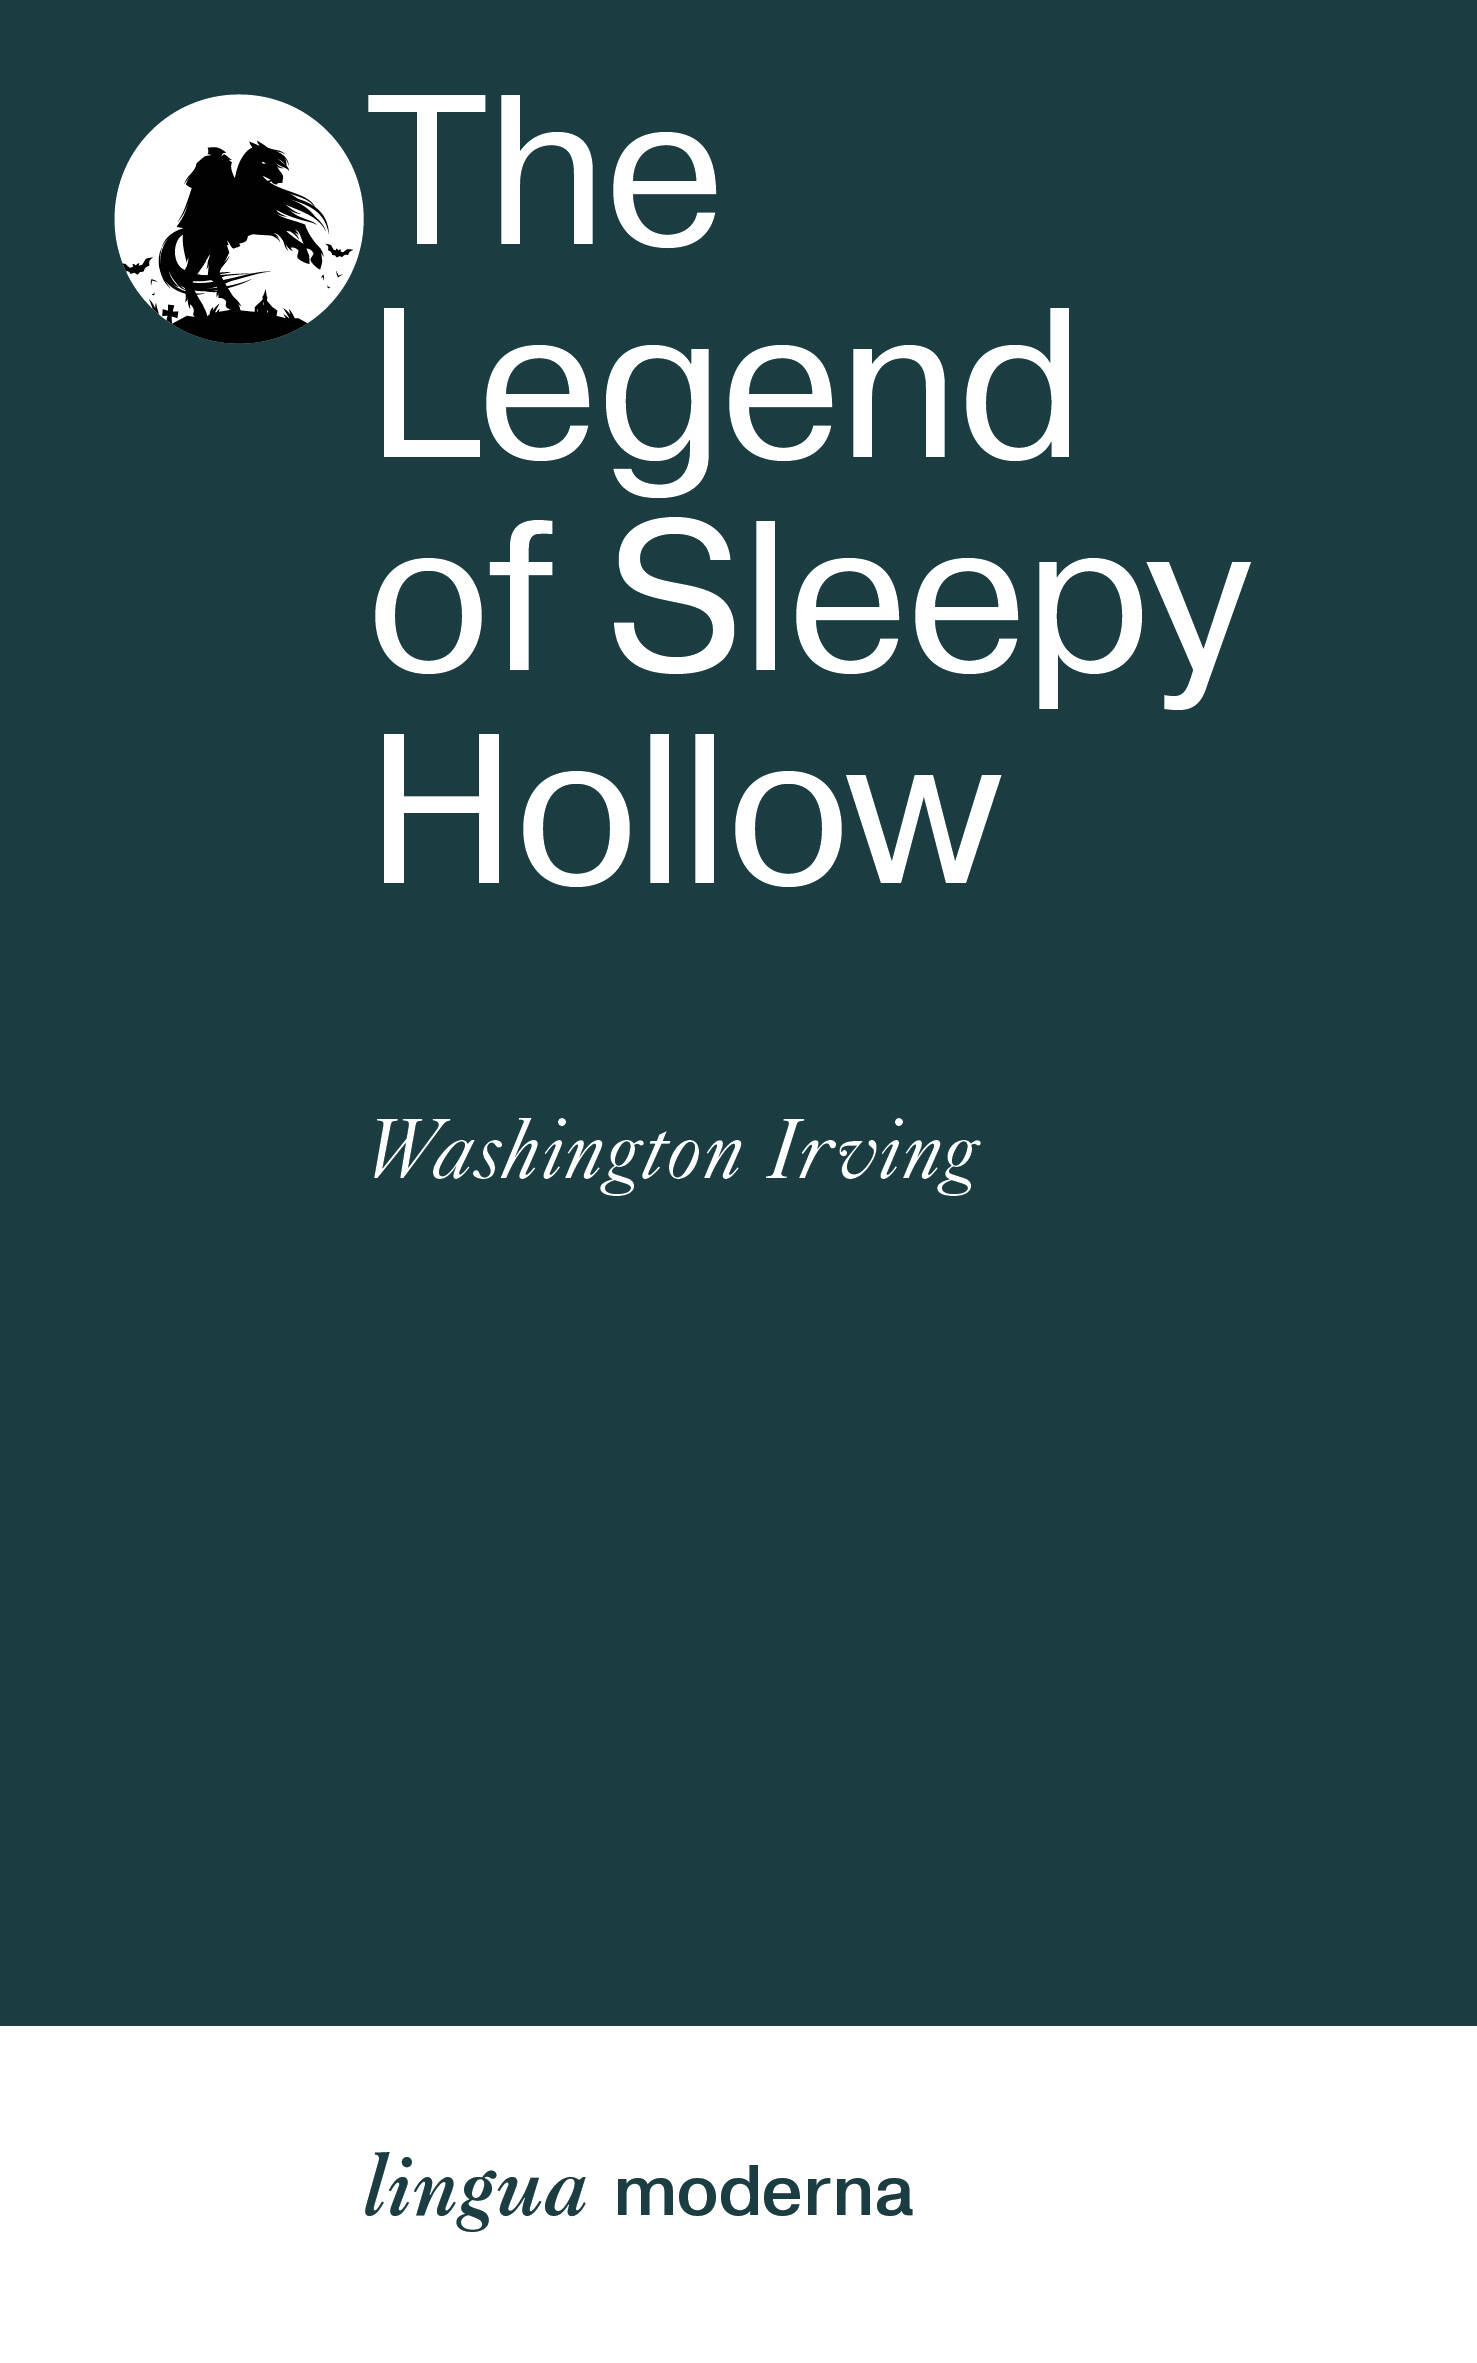 Irving Washington The Legend of Sleepy Hollow